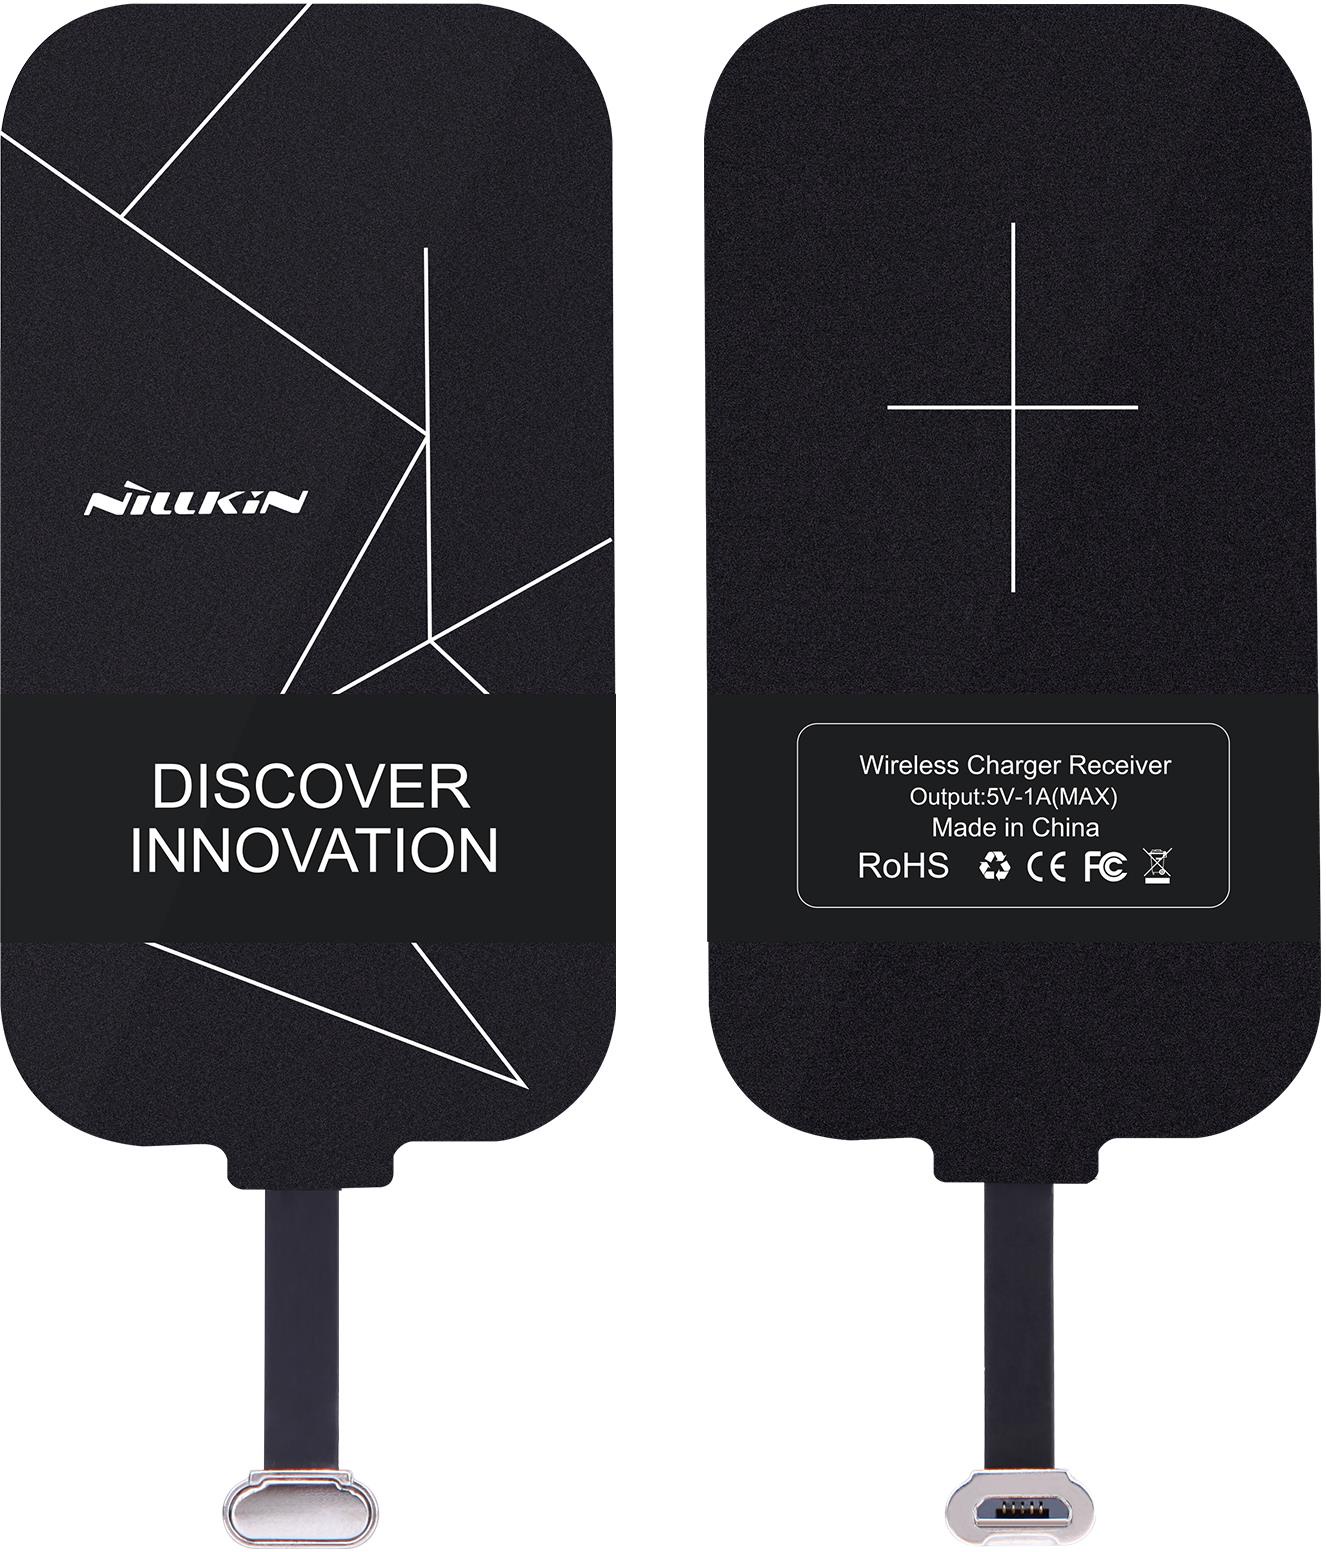 Адаптер для беспроводной зарядки телефона. Nillkin ресивер Qi для IPAD. Модуль для беспроводной зарядки Micro USB телефона. Адаптер Qi для беспроводной зарядки iphone. Адаптер тайп c для беспроводной зарядки.